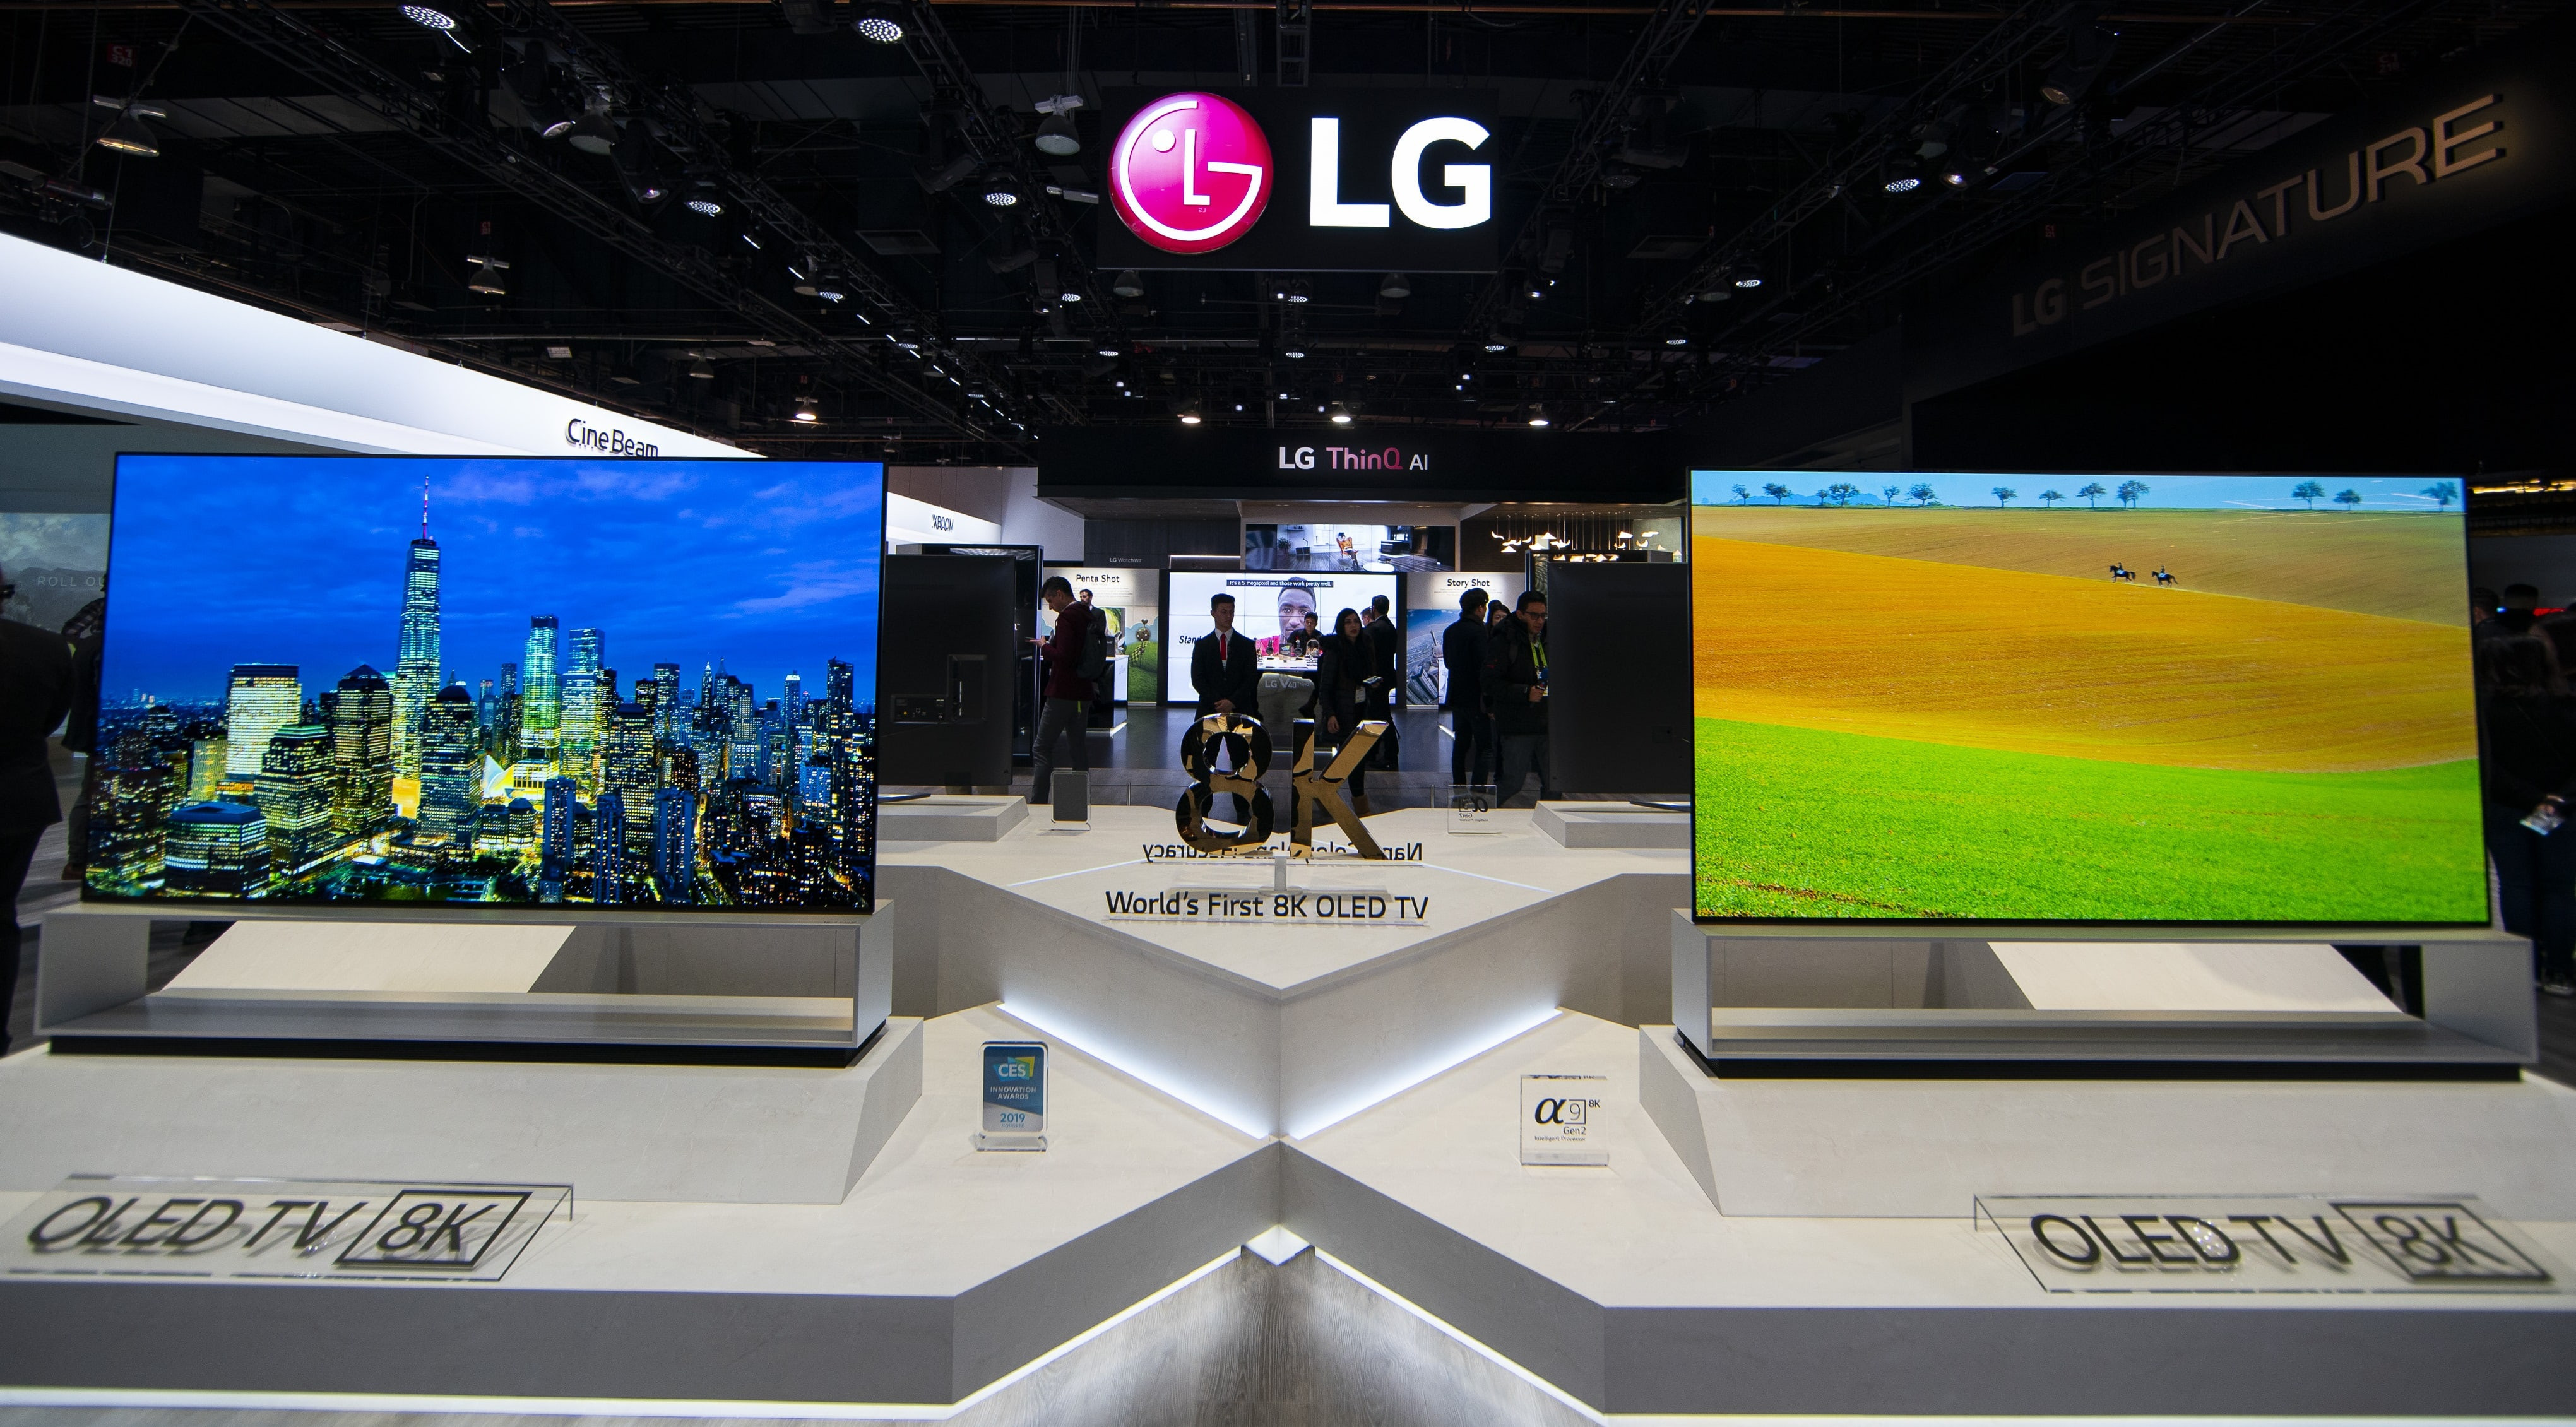 LG 8K OLED TV 003-min.jpg